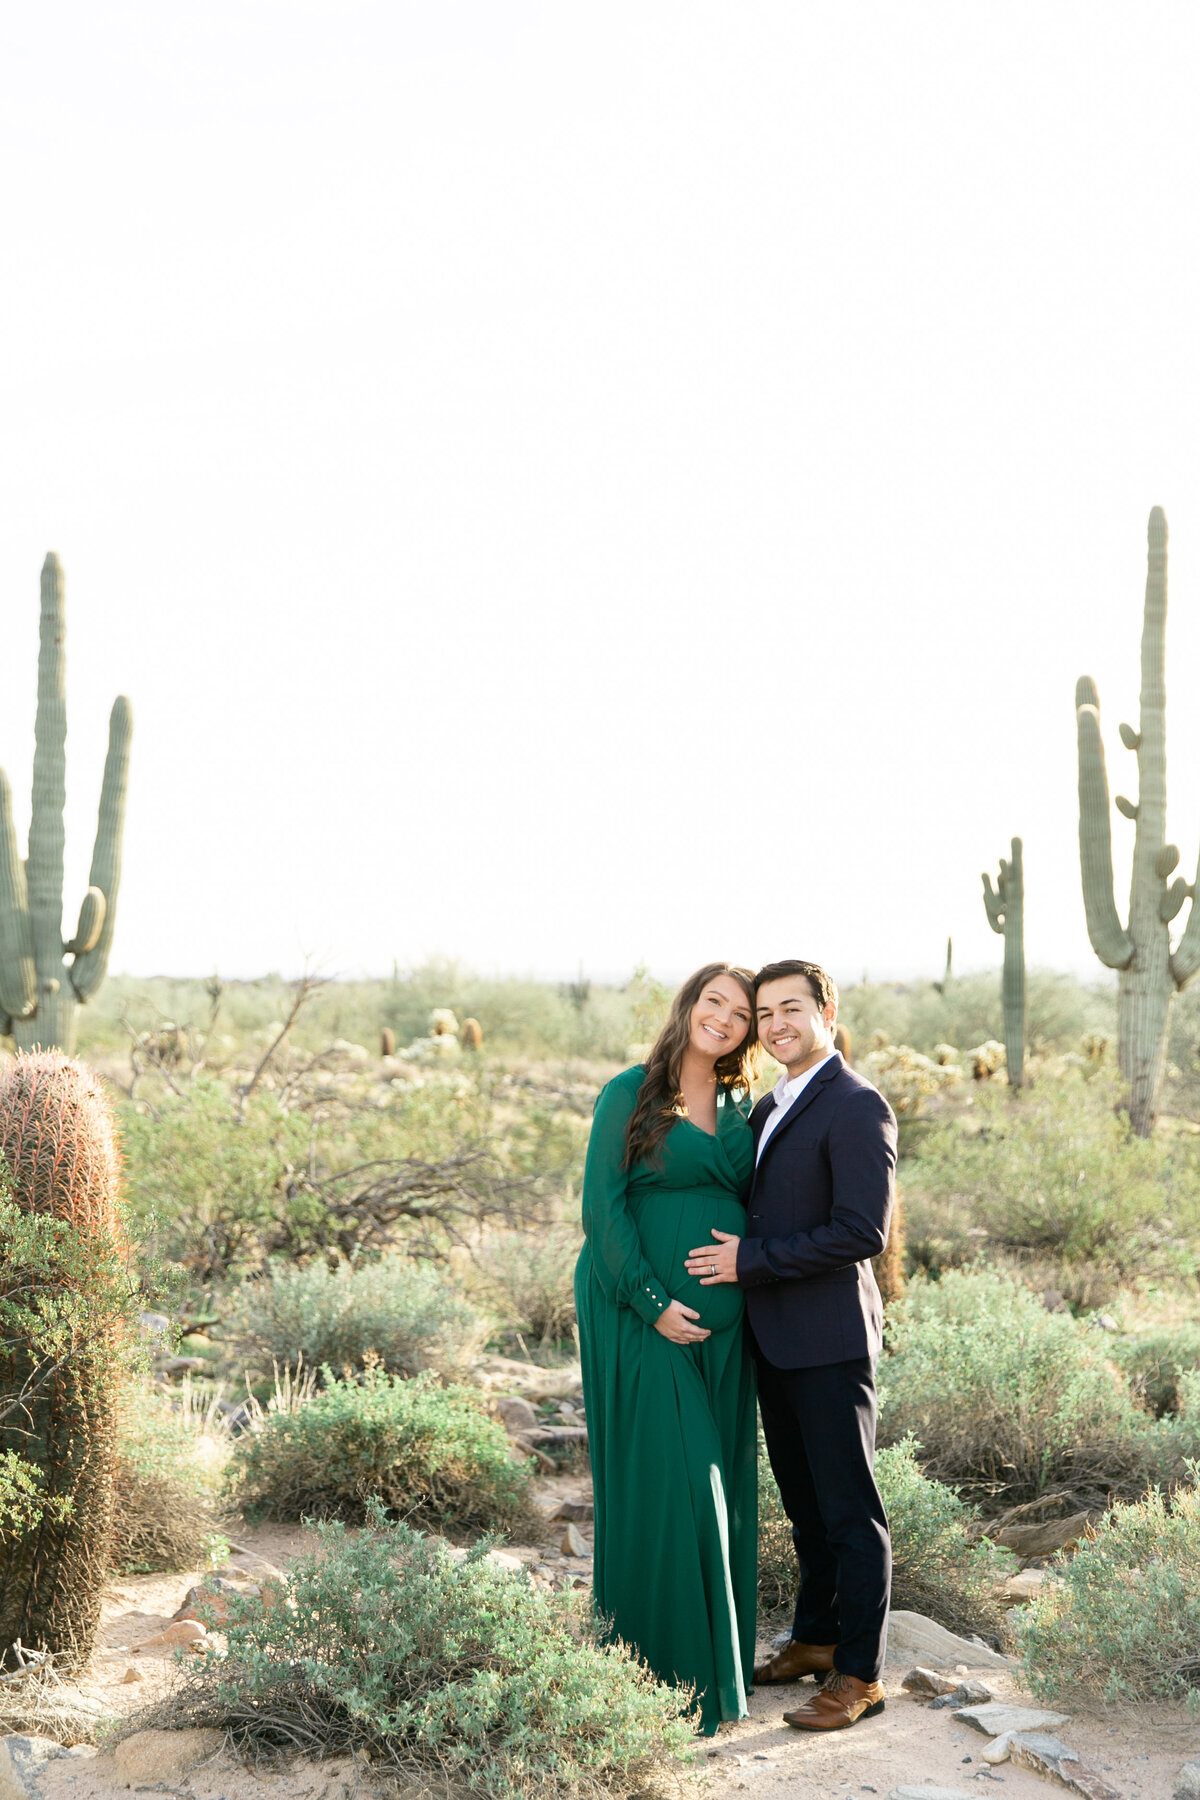 Karlie Colleen Photography - Scottsdale Arizona - Maternity Photos - Shelby & Cris-6